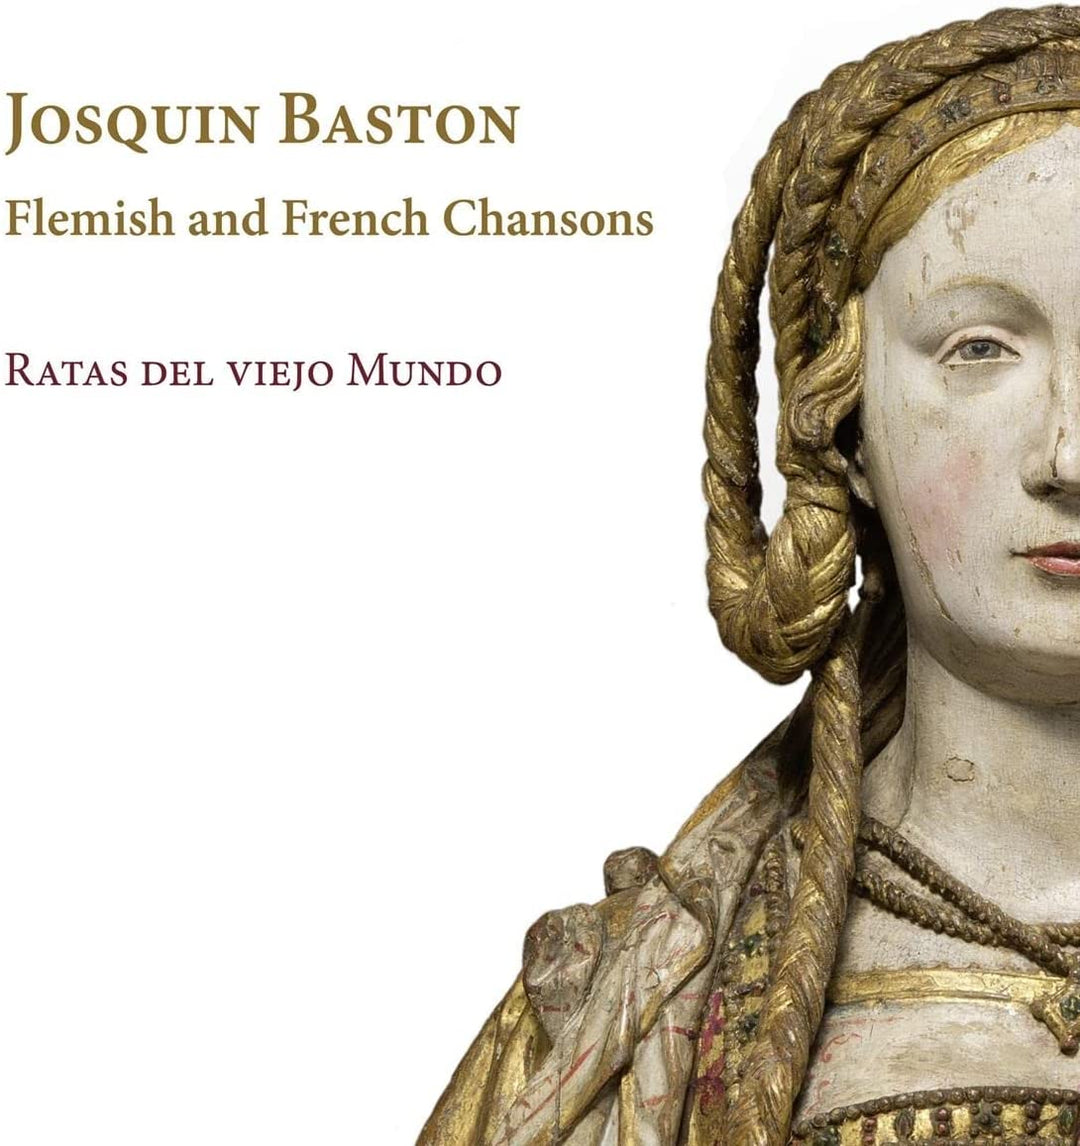 Ratas del viejo mundo - Baston: Flemish and French Chansons [Audio CD]